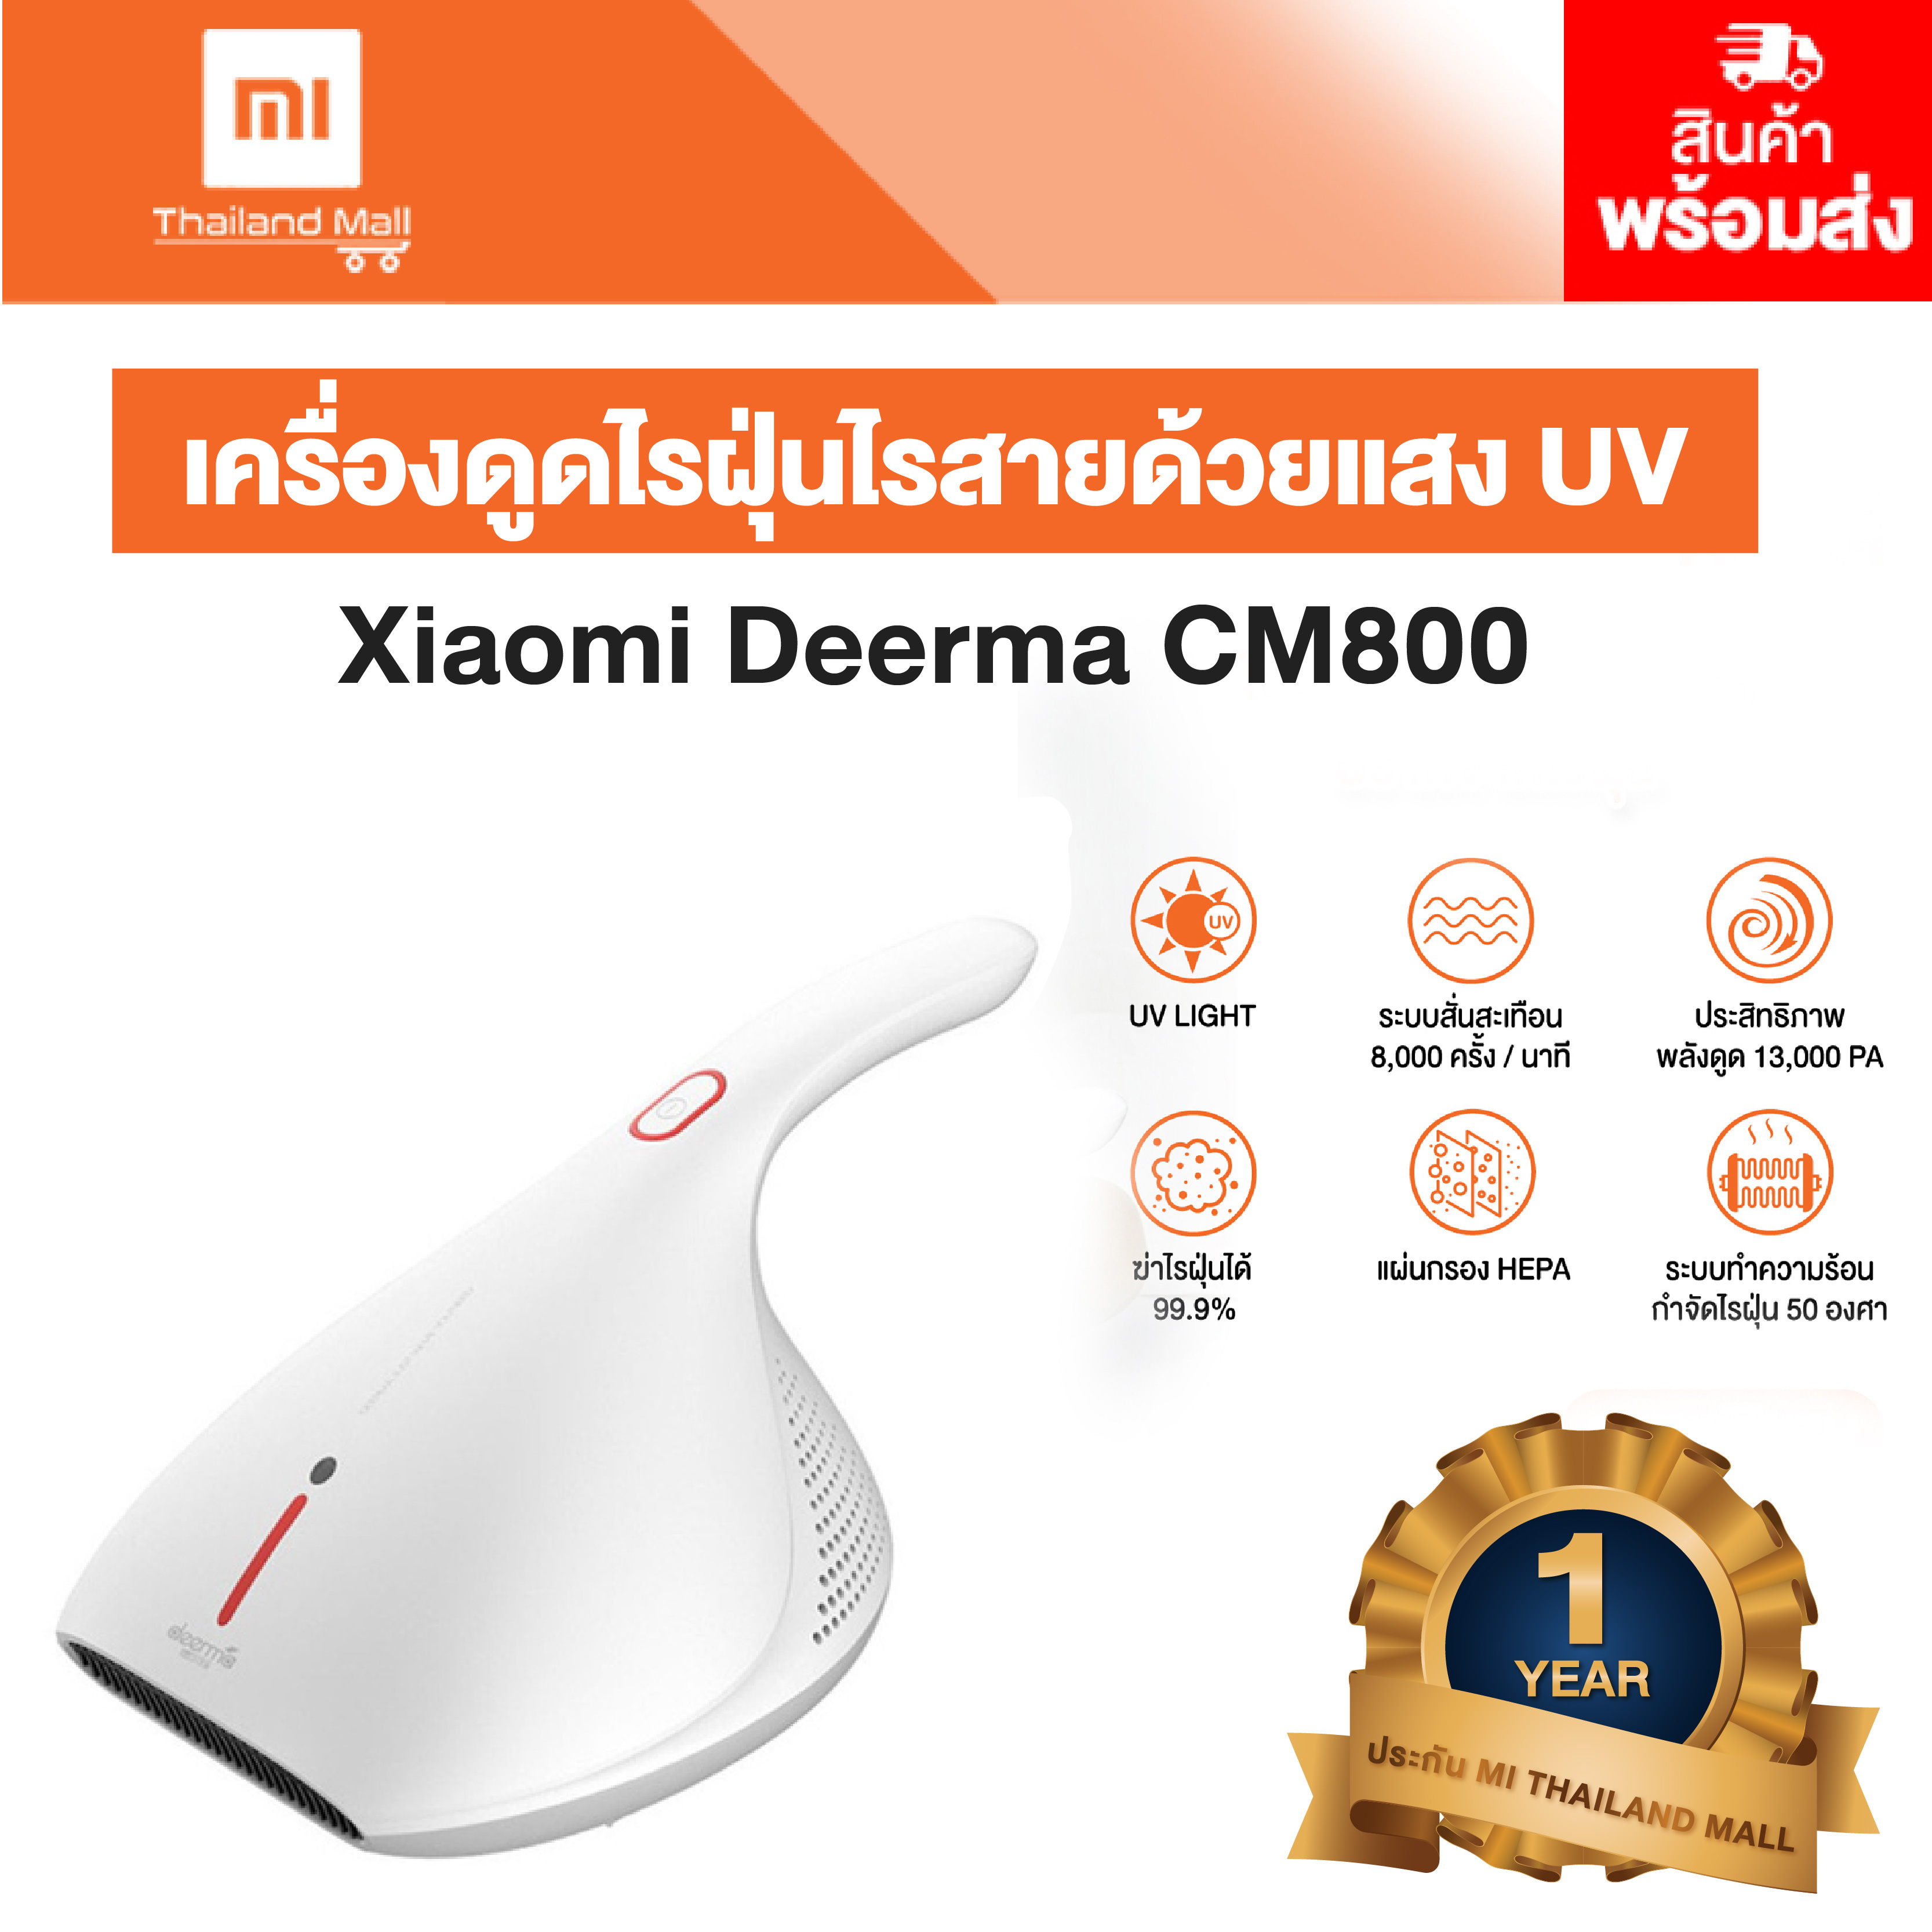 Xiaomi Deerma CM800 ครื่องดูดฝุ่นและกำจัดไรฝุ่น สามารถฆ่าเชื้อด้วยแสง UV เครื่องดุดไรฝุ่น - Global Version ประกัน Mi Thailand Mall 1ปี